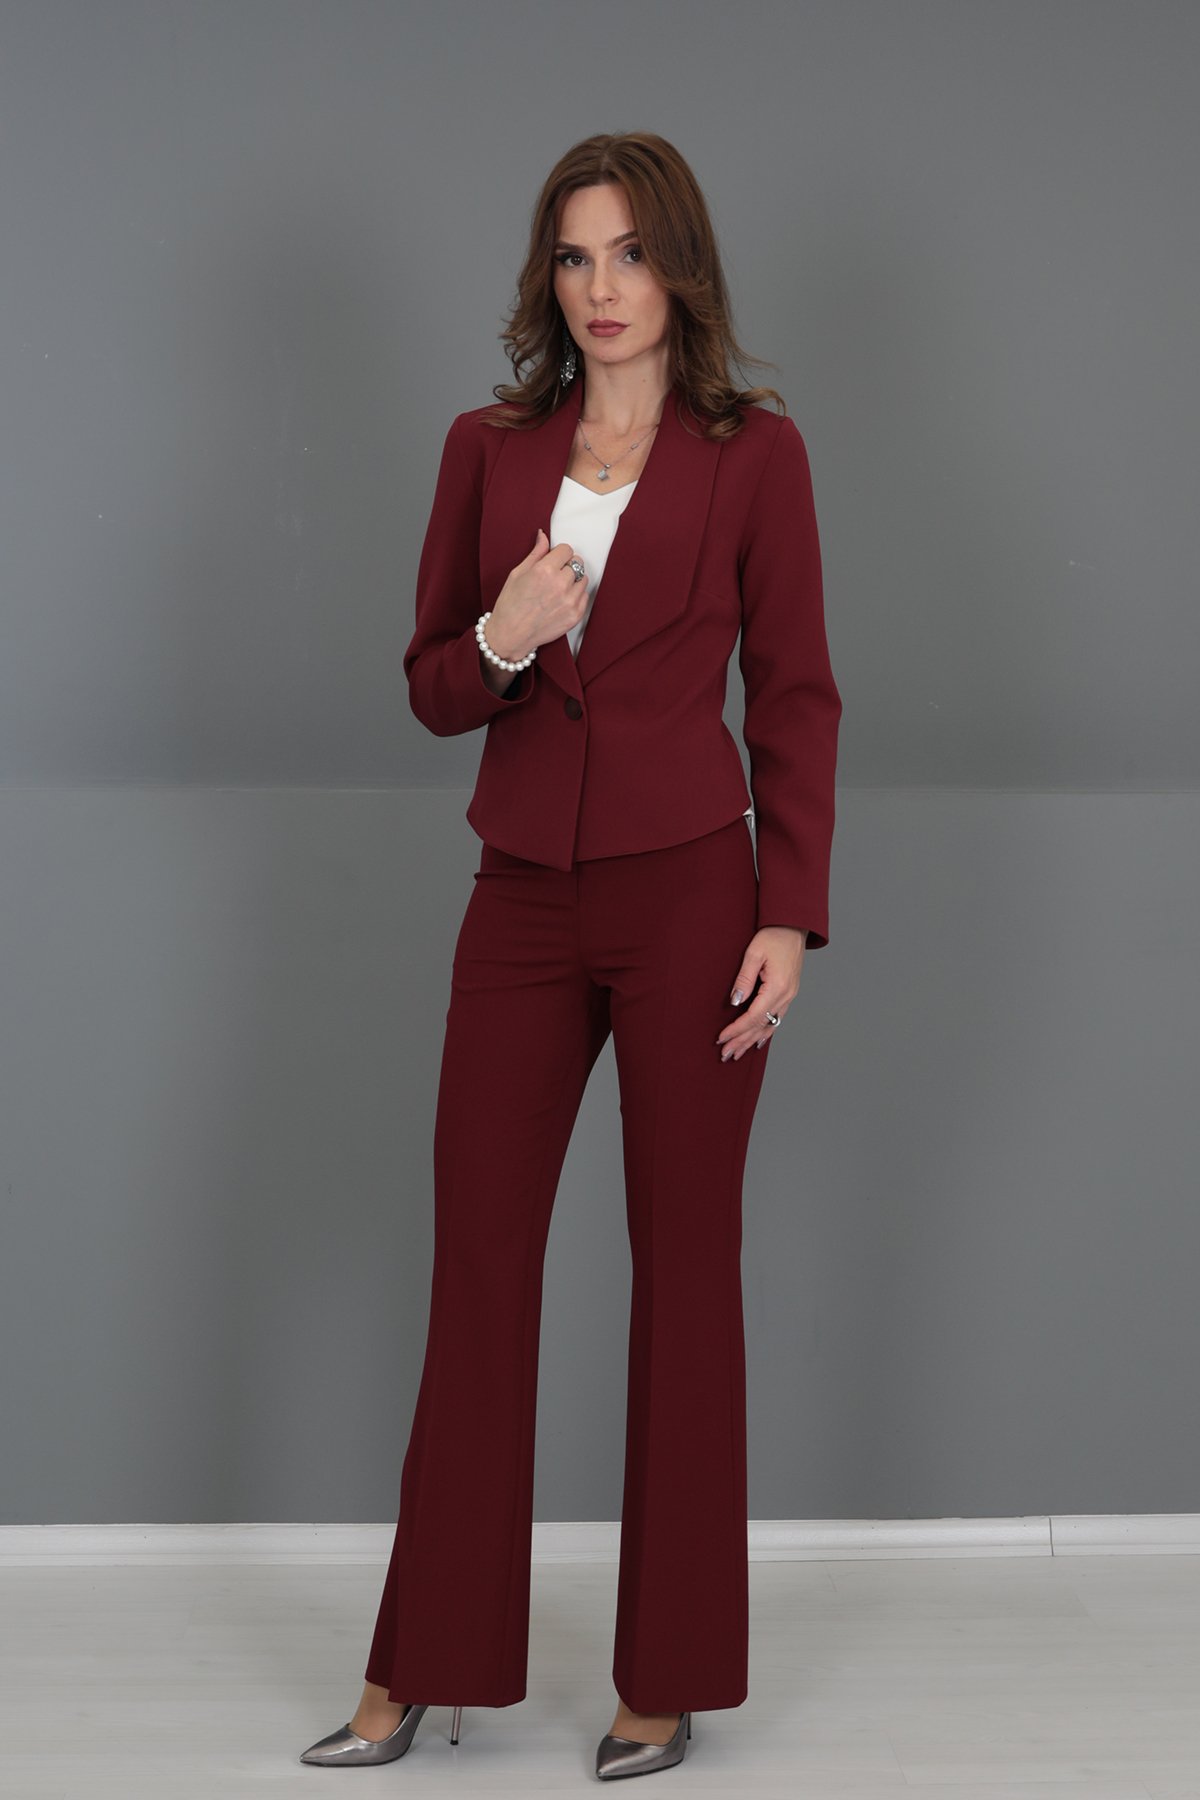 Mini Ceket & İspanyol Paça Pantolon Takım-Bordo - Önder Özsoy | Ofis Giyim  | Yeni Sezon